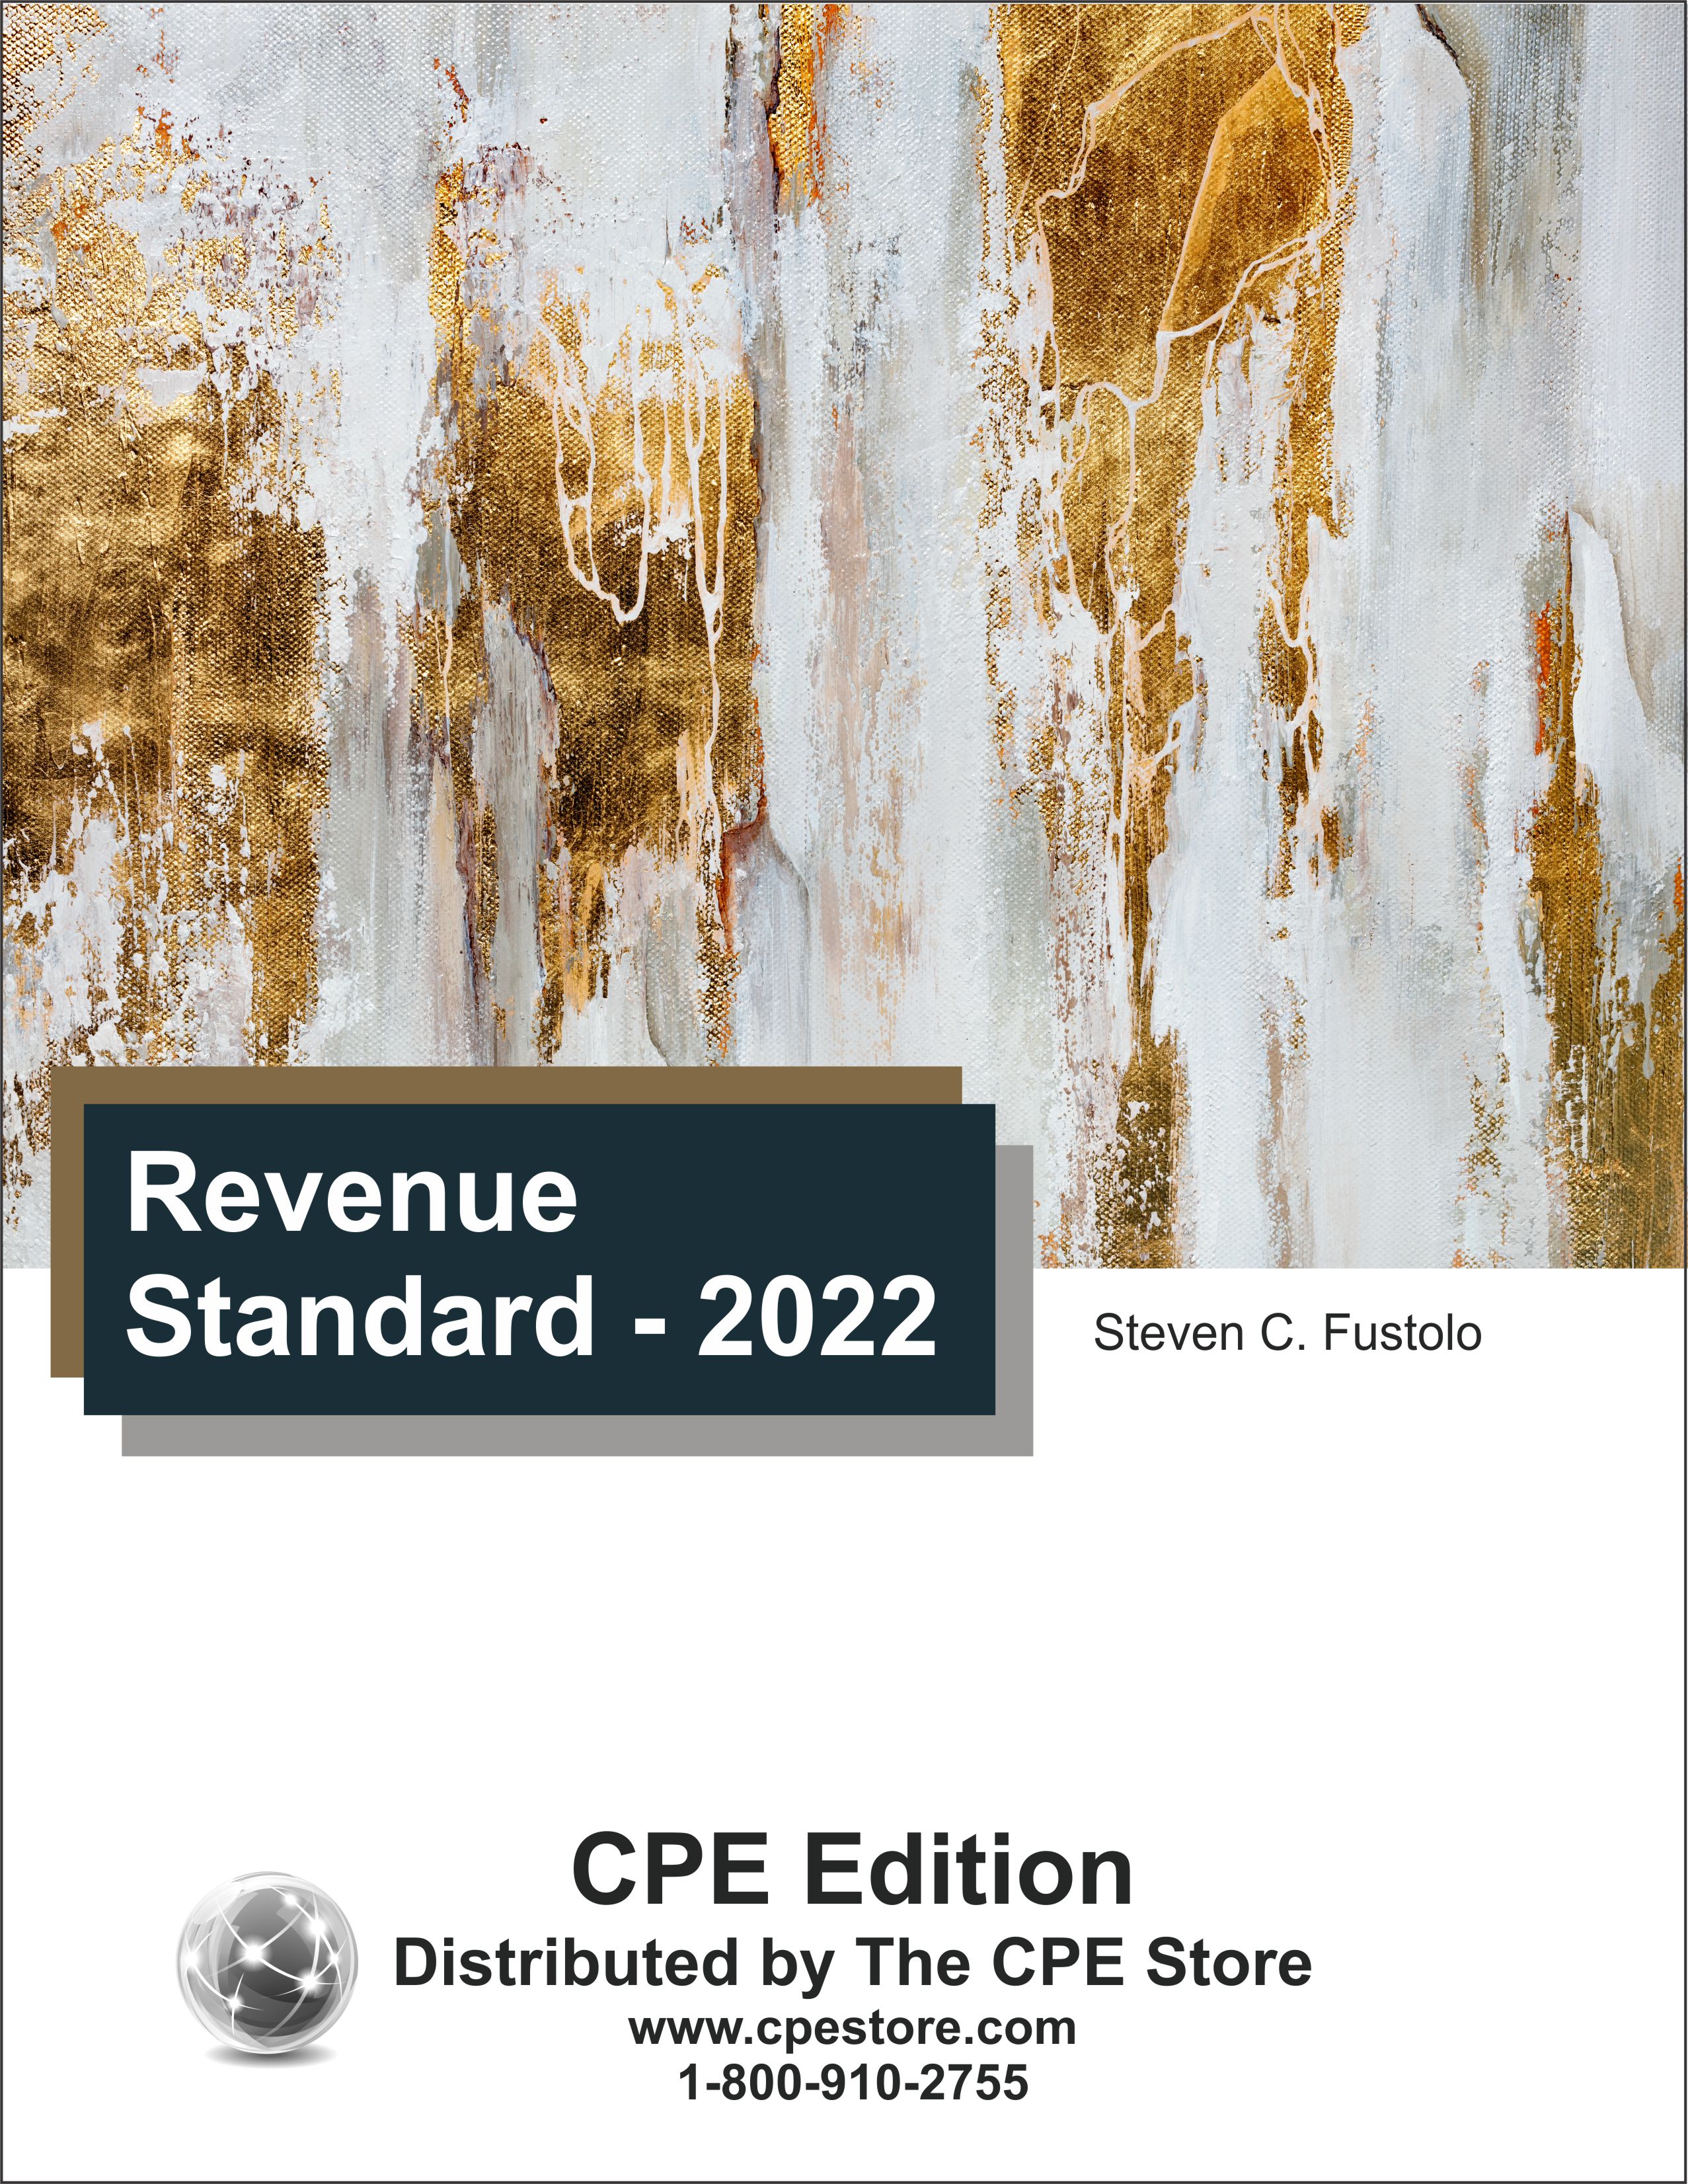 Revenue Standard - 2022